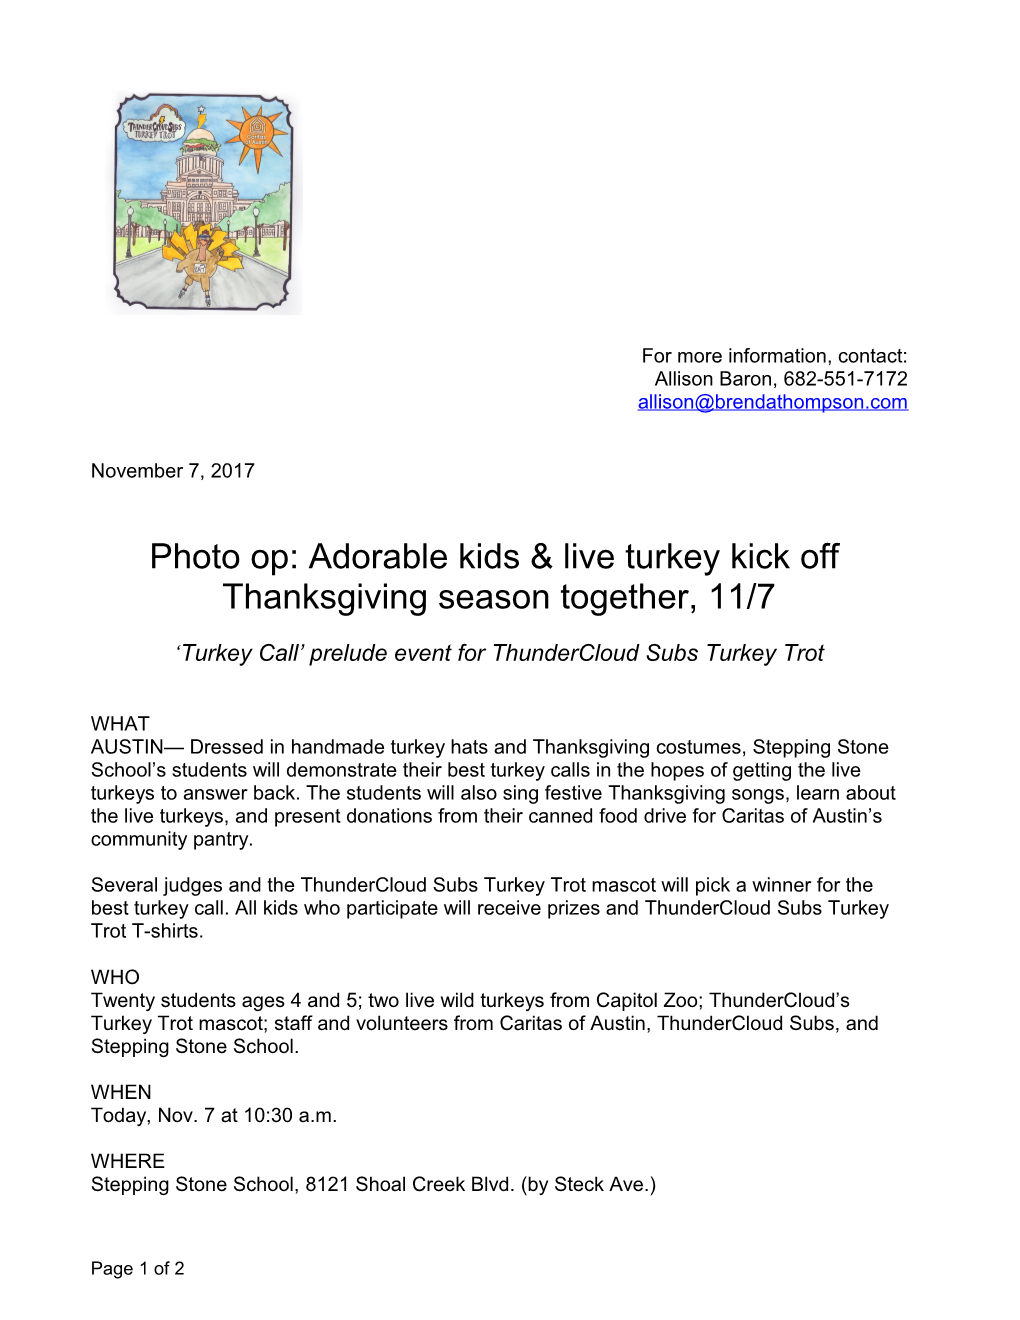 Photo Op: Adorable Kids & Live Turkey Kick Off